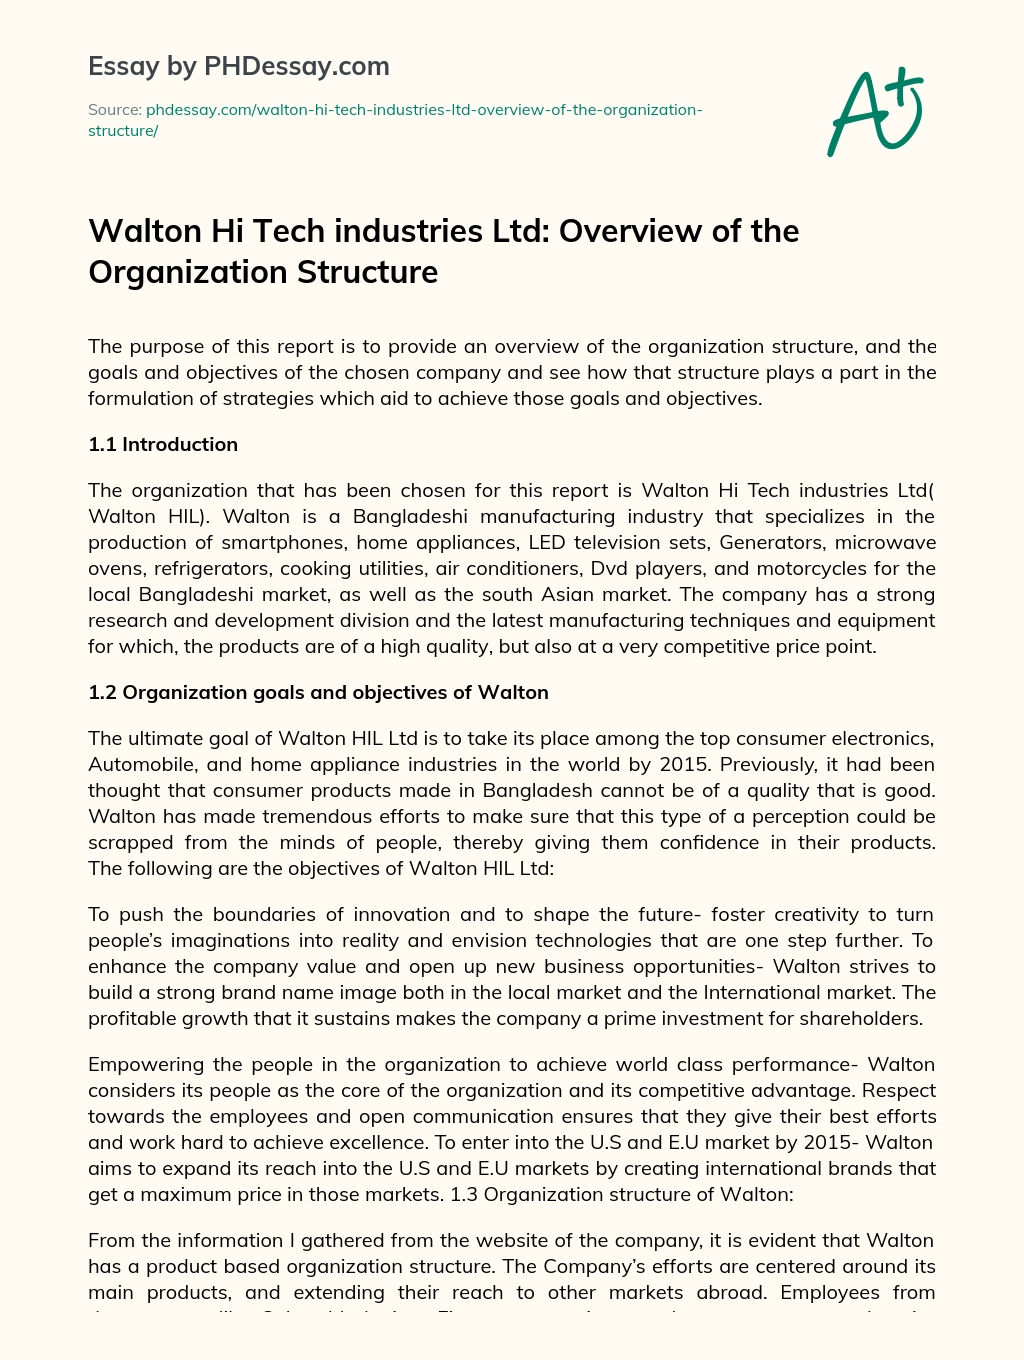 Walton Hi Tech industries Ltd: Overview of the Organization Structure essay